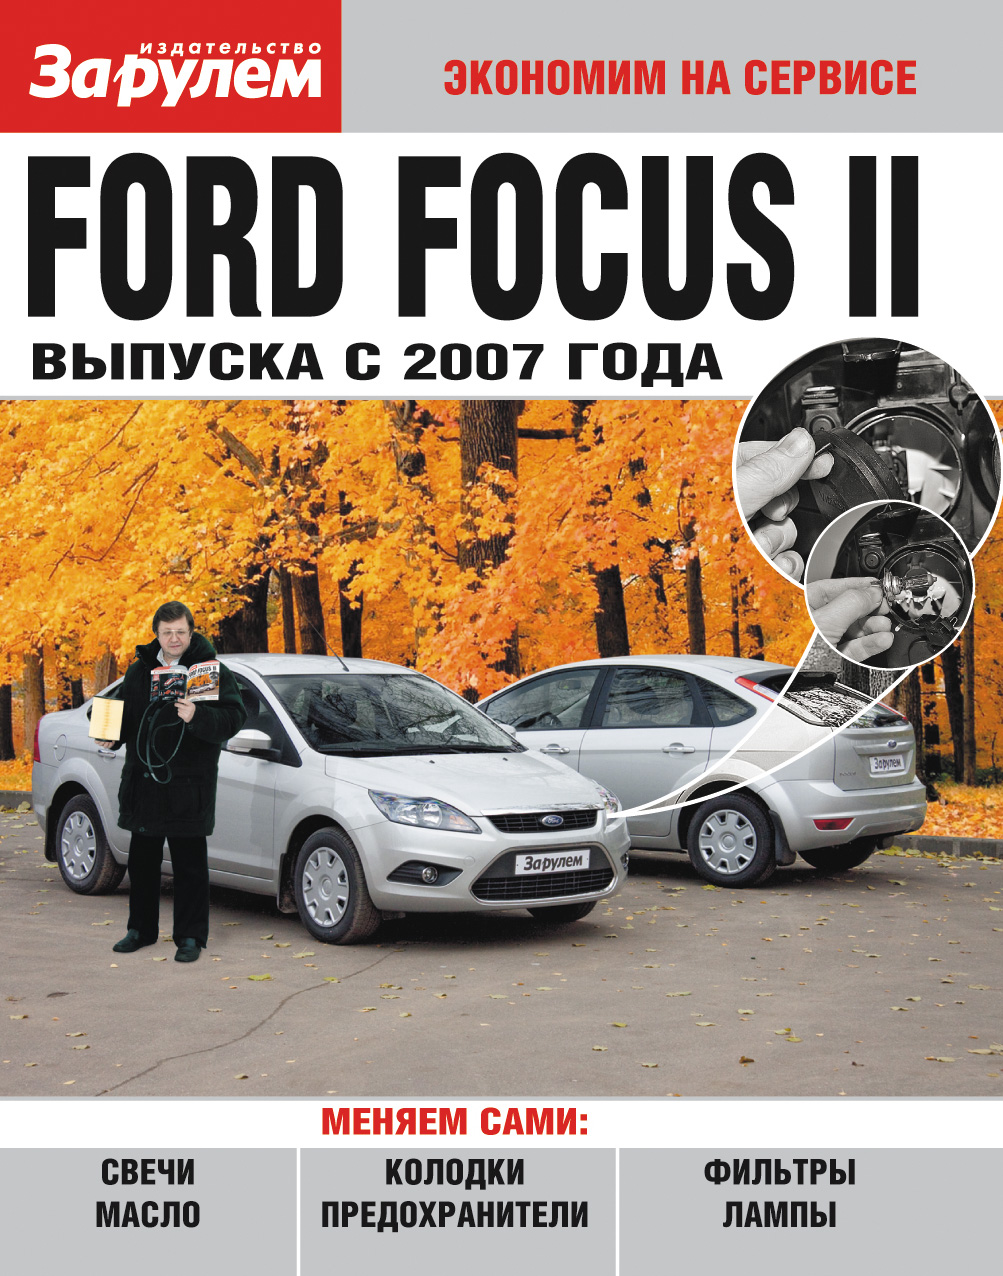 Ford Focus IIвыпуска с 2007 года